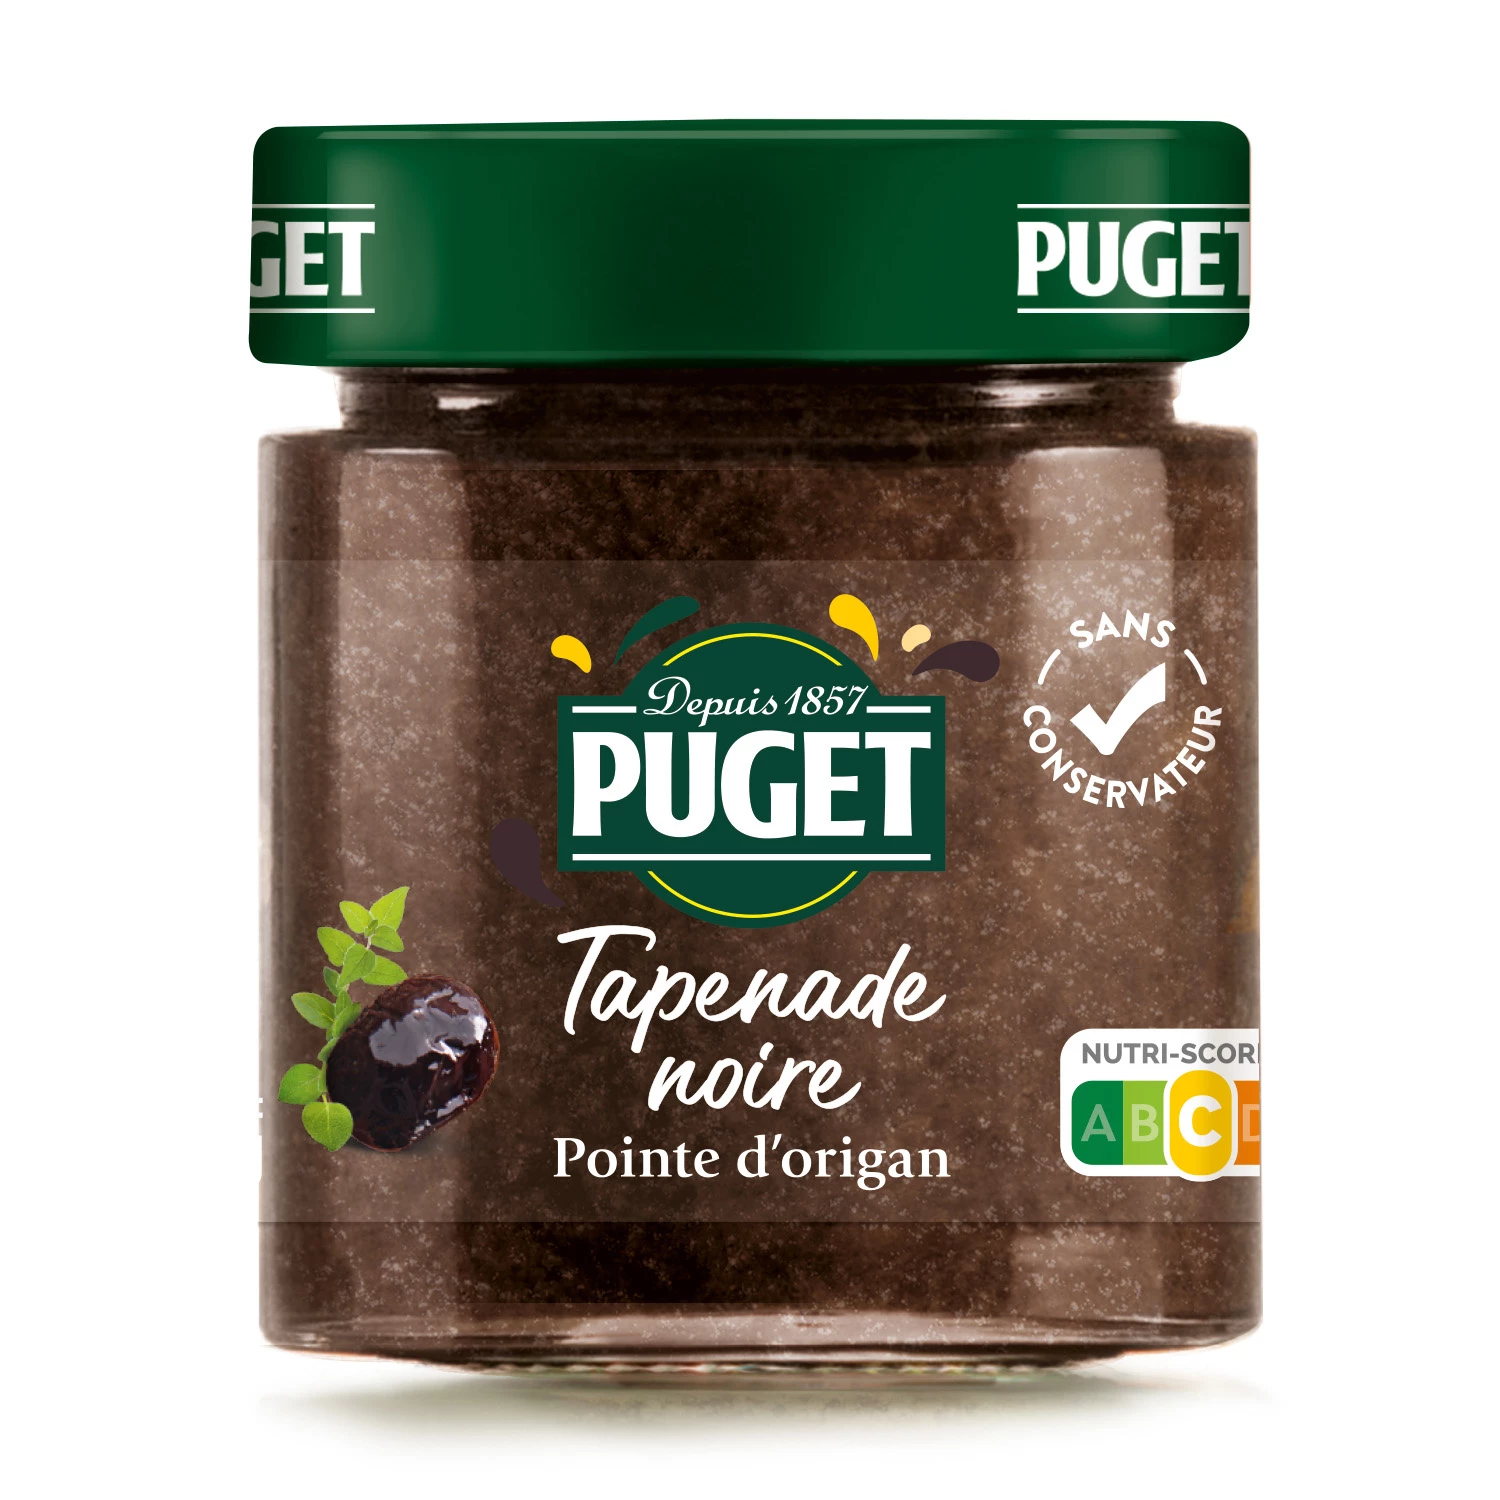 Black Olive Tapenade with Oregano Tip, 120g - puget